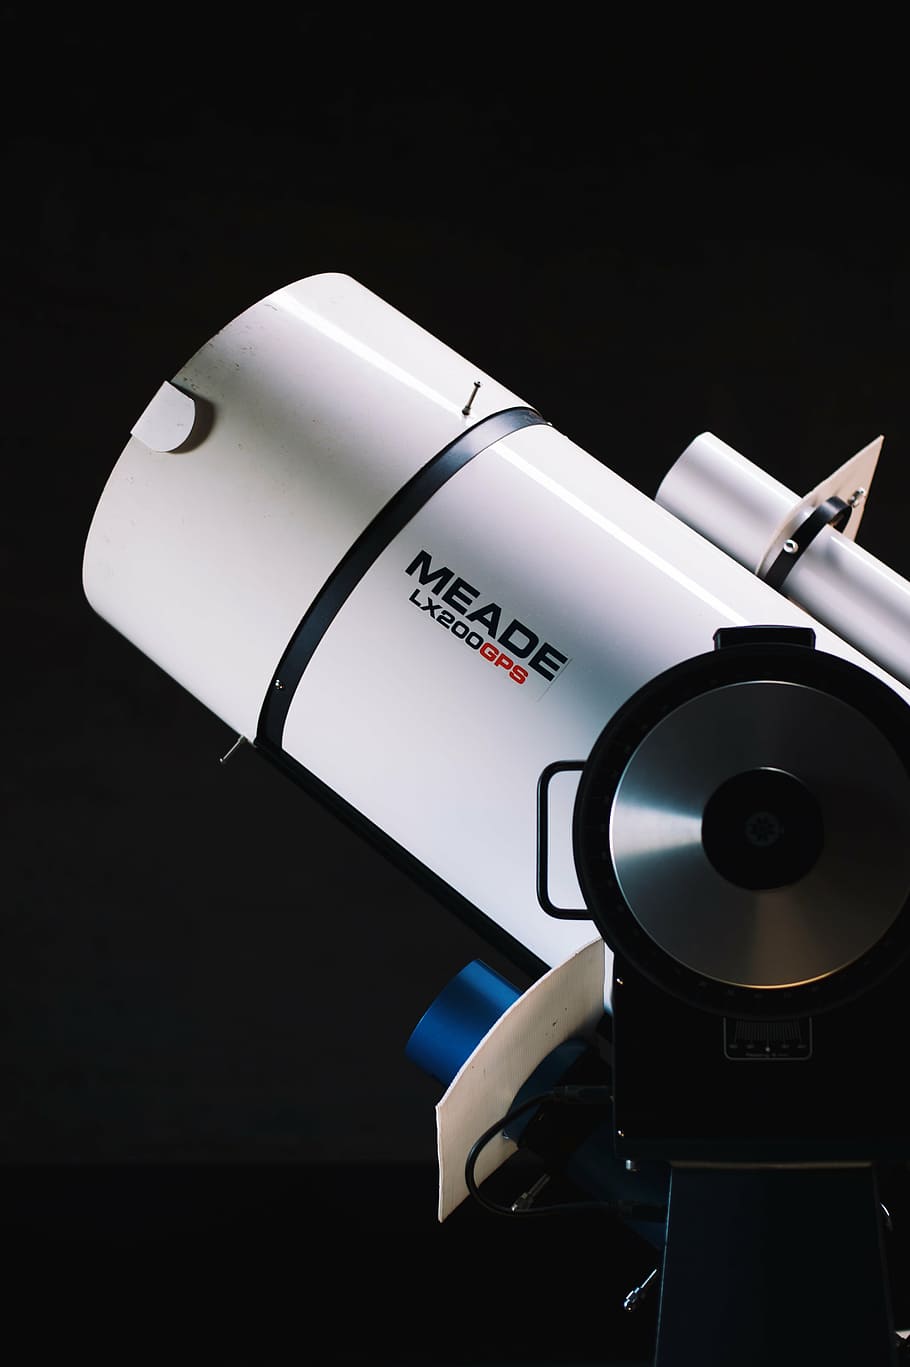 branco, preto, meade telescópio lx 200gps, óptico, instrumento, microscópio, telescópio, vigilância, lente - instrumento óptico, tecnologia